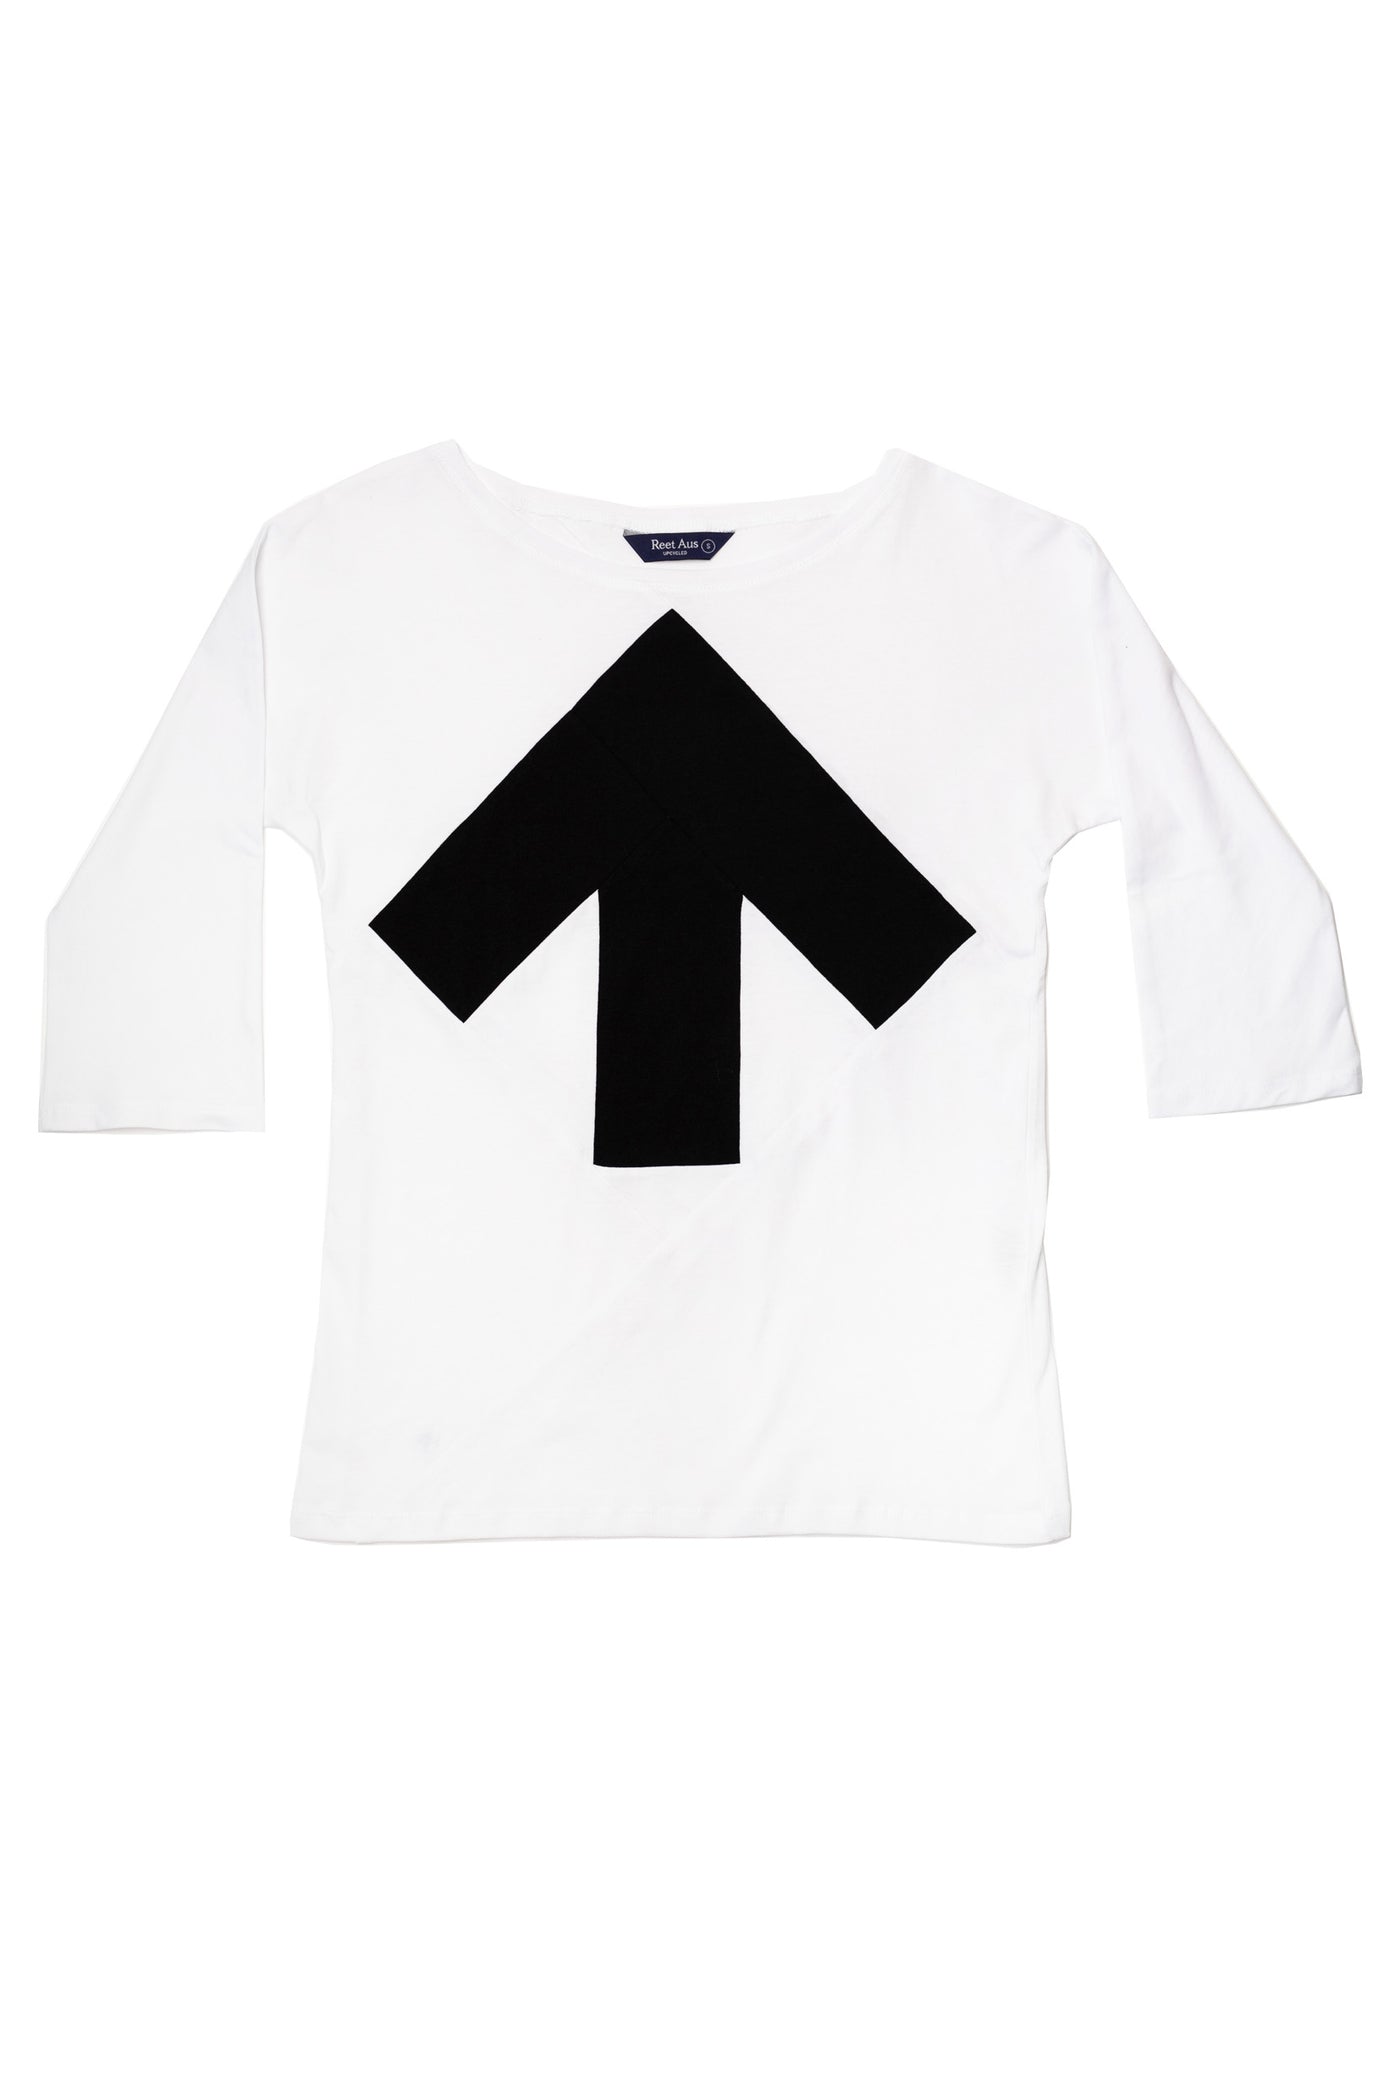 Up-shirt for women, 3/4 sleeves | White, black - Reet Aus